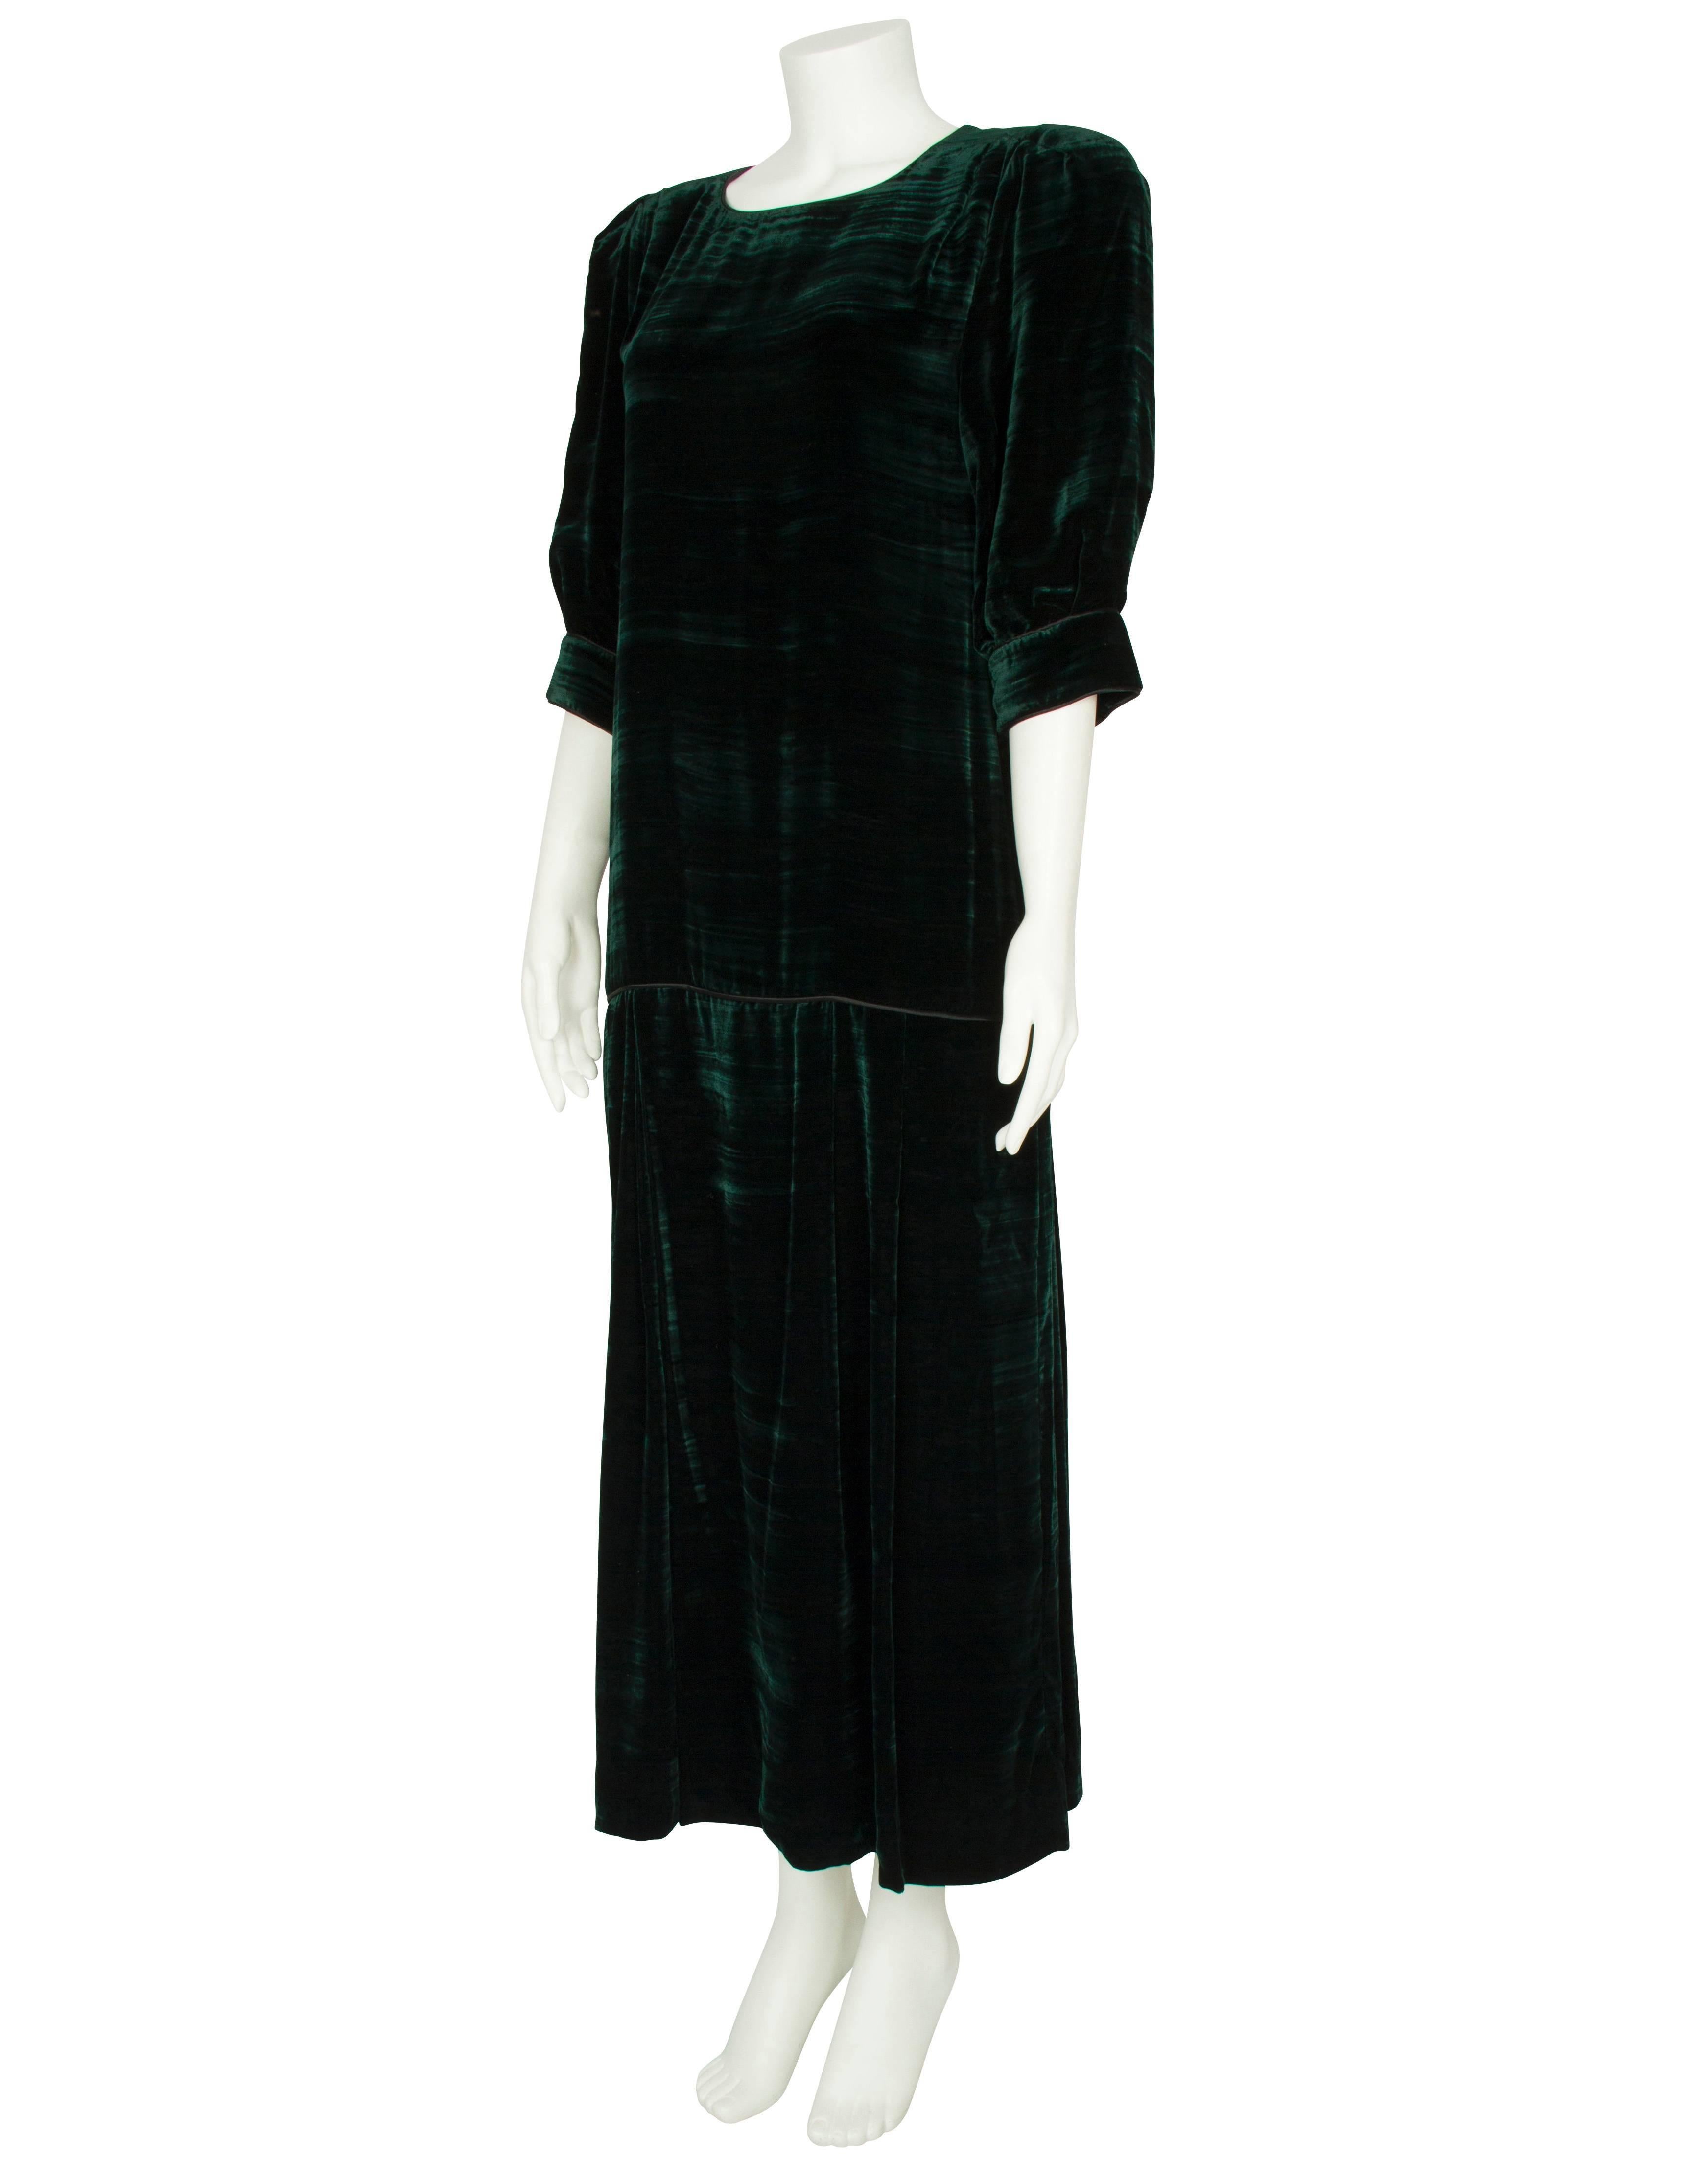 Black 1980s Anouska Hempel Forest Green Velvet Dropped-Waist Dress with Puffed Sleeves For Sale